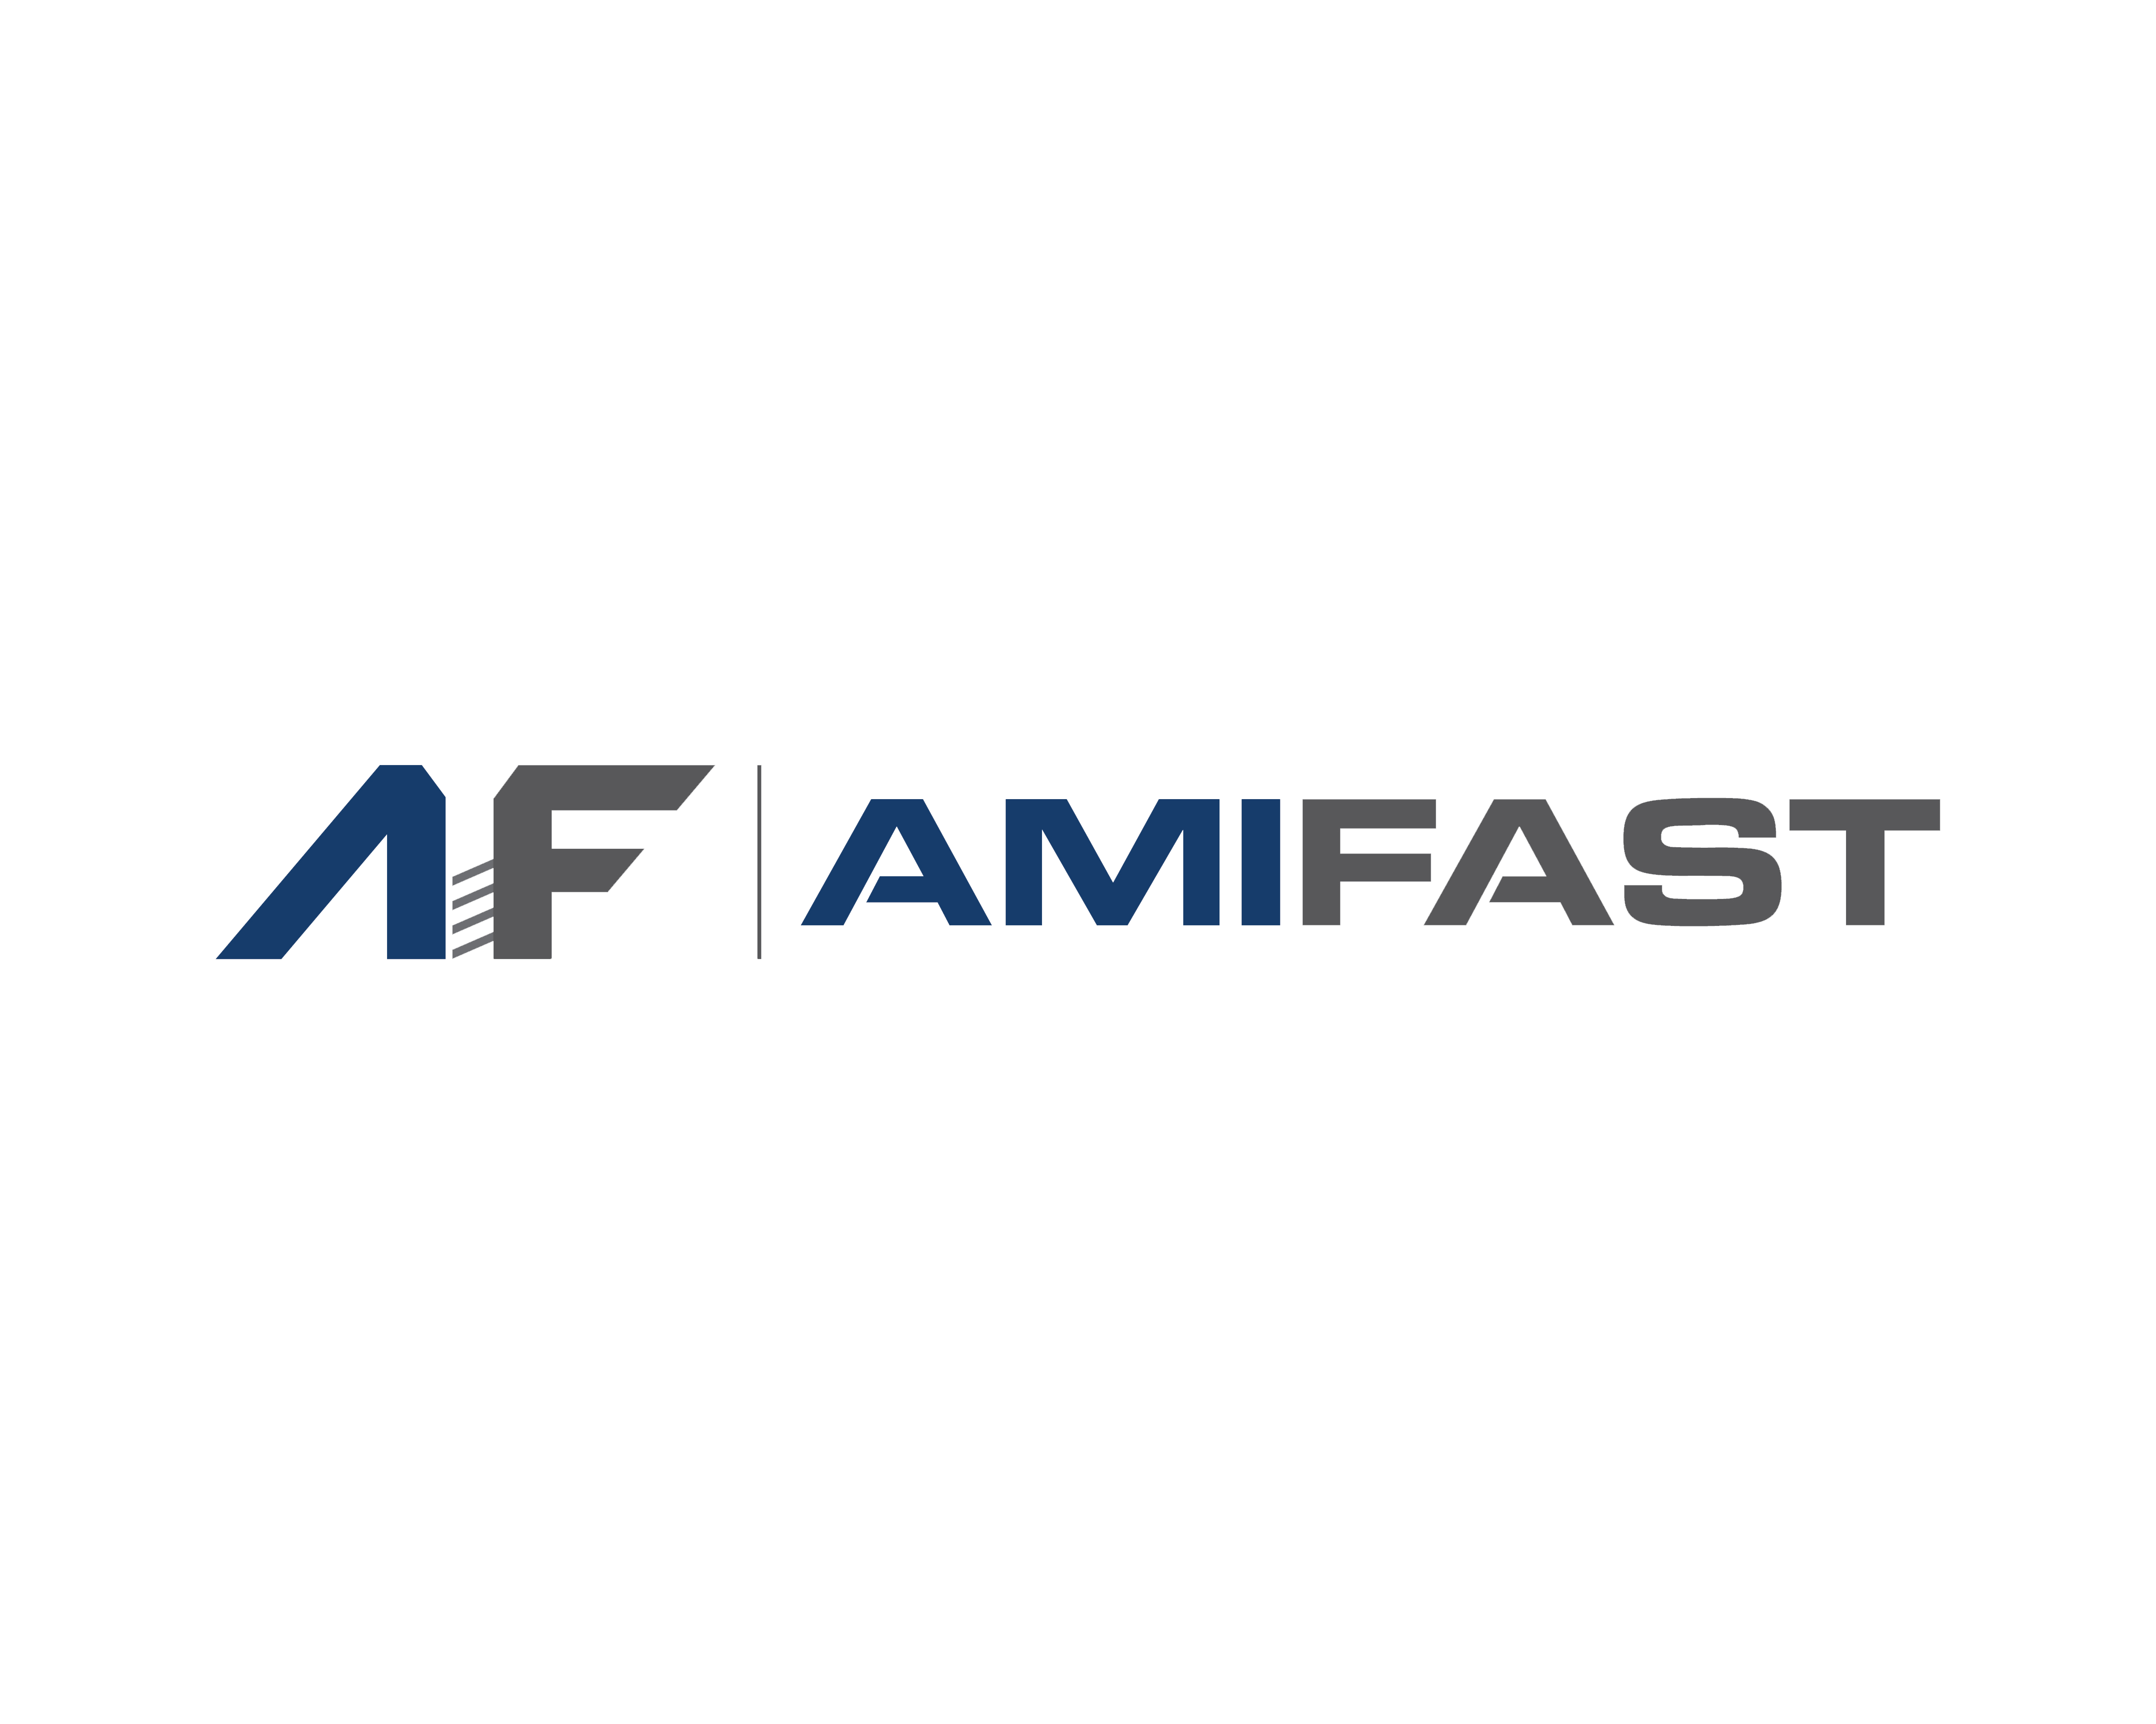 Afinitas Acquires Leading Fastener Supplier Amifast